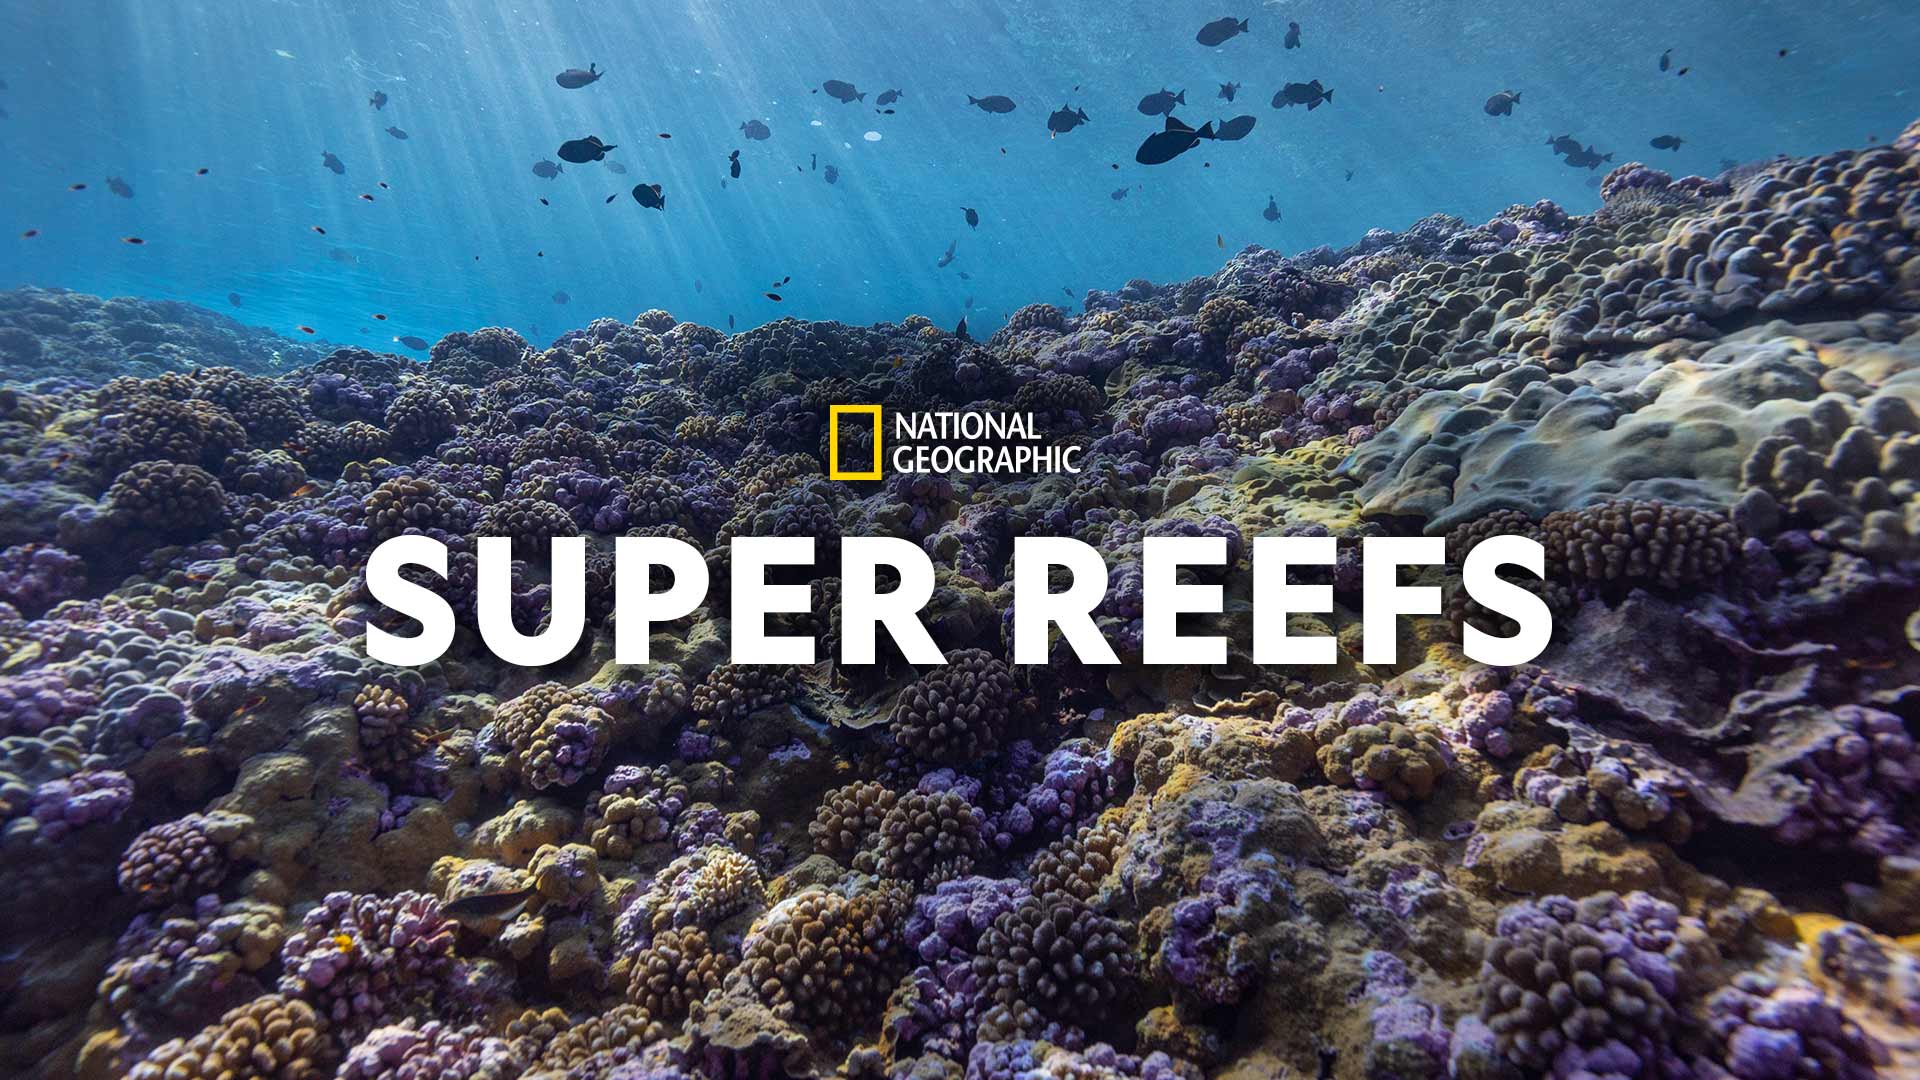 Super Reefs